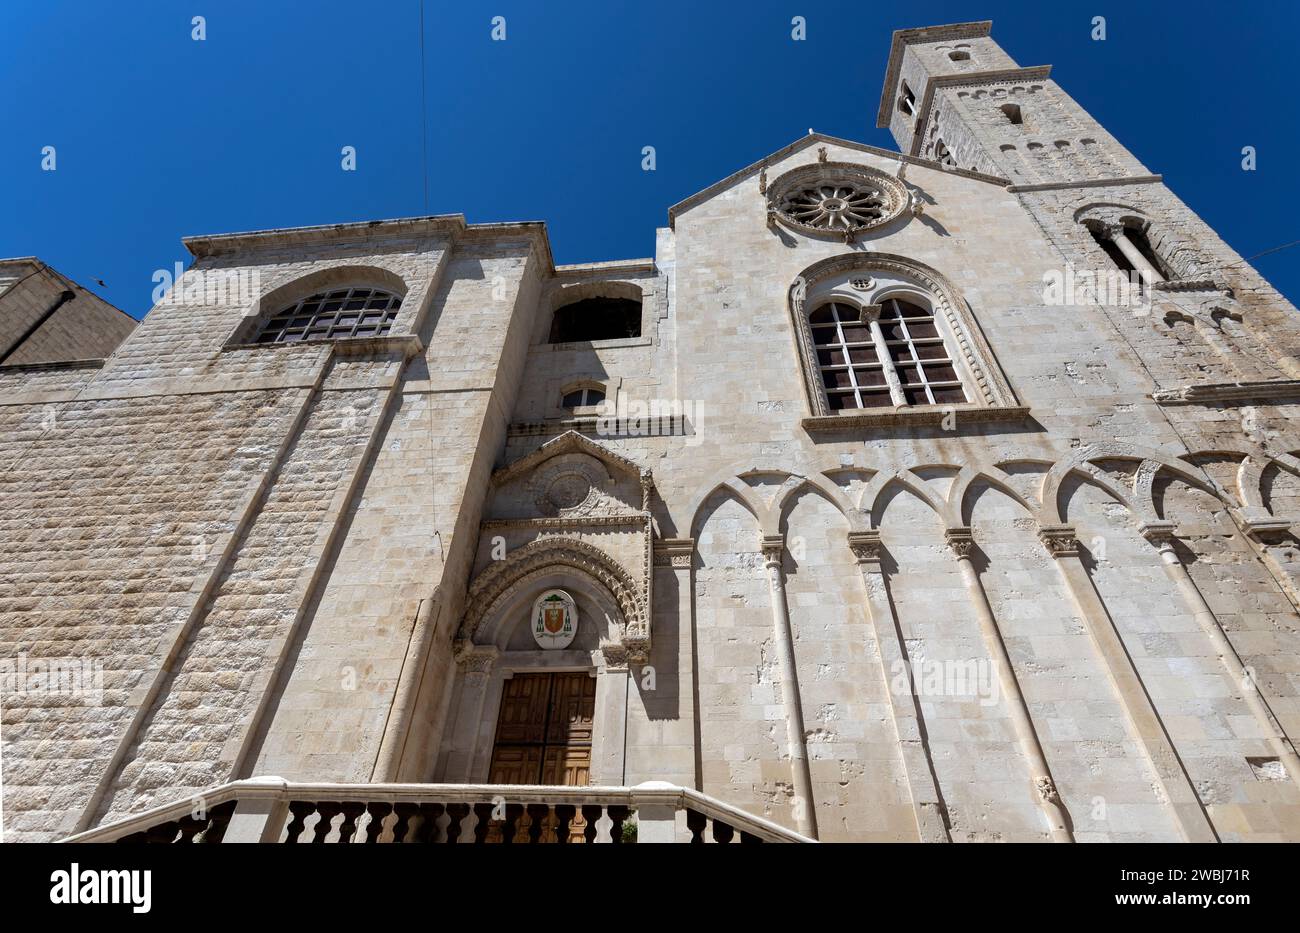 GIOVINAZZO, ITALY, JULY 10, 2022 - The Co-Cathedral of Holy Mary of the Assumption (Santa Maria Assunta) in Giovinazzo, province of Bari, Italy Stock Photo